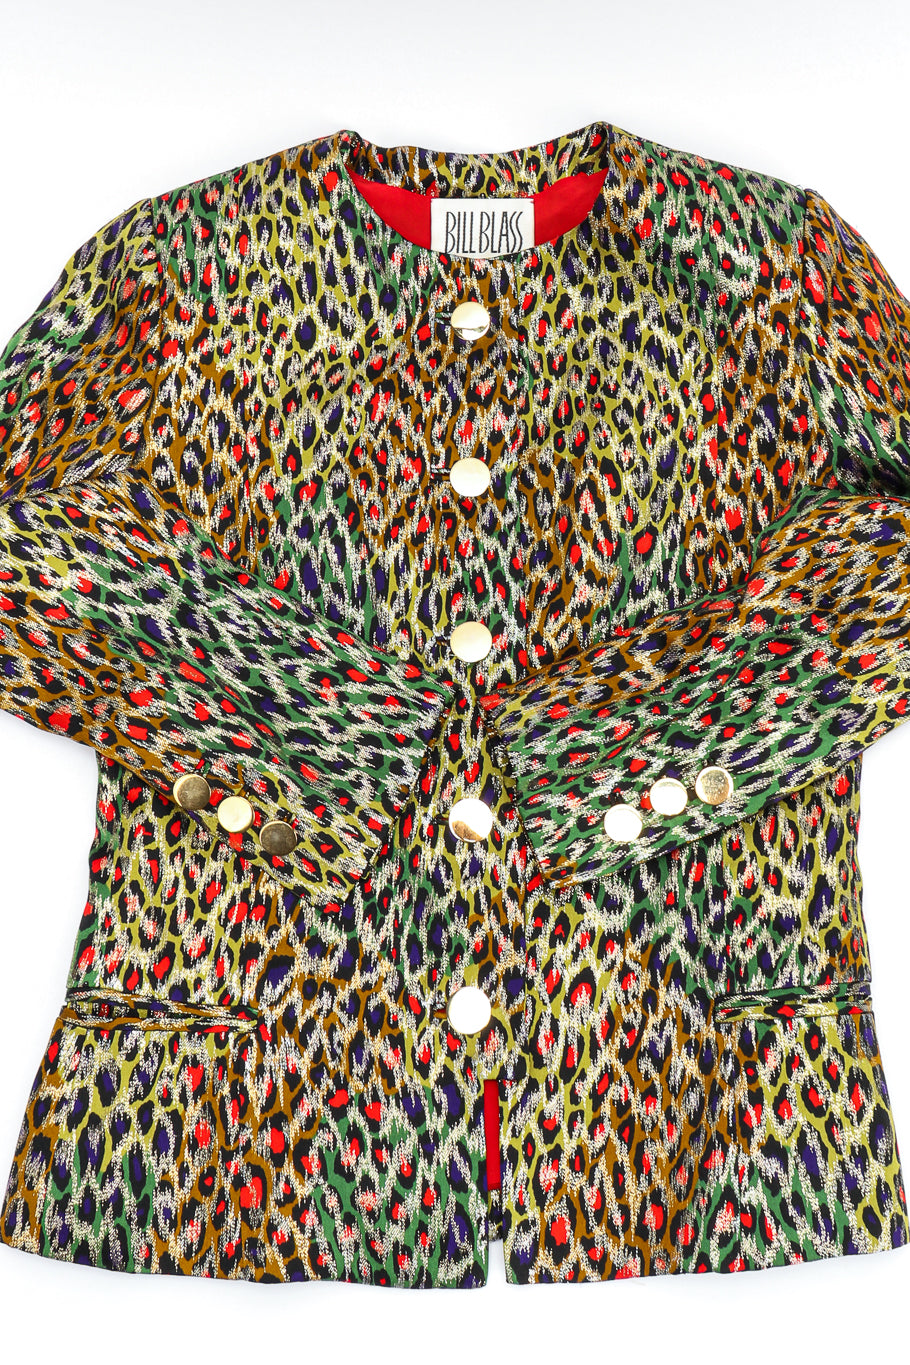 Vintage Bill Blass Leopard Print Silk Jacket front view laid flat on a white backdrop @Recessla